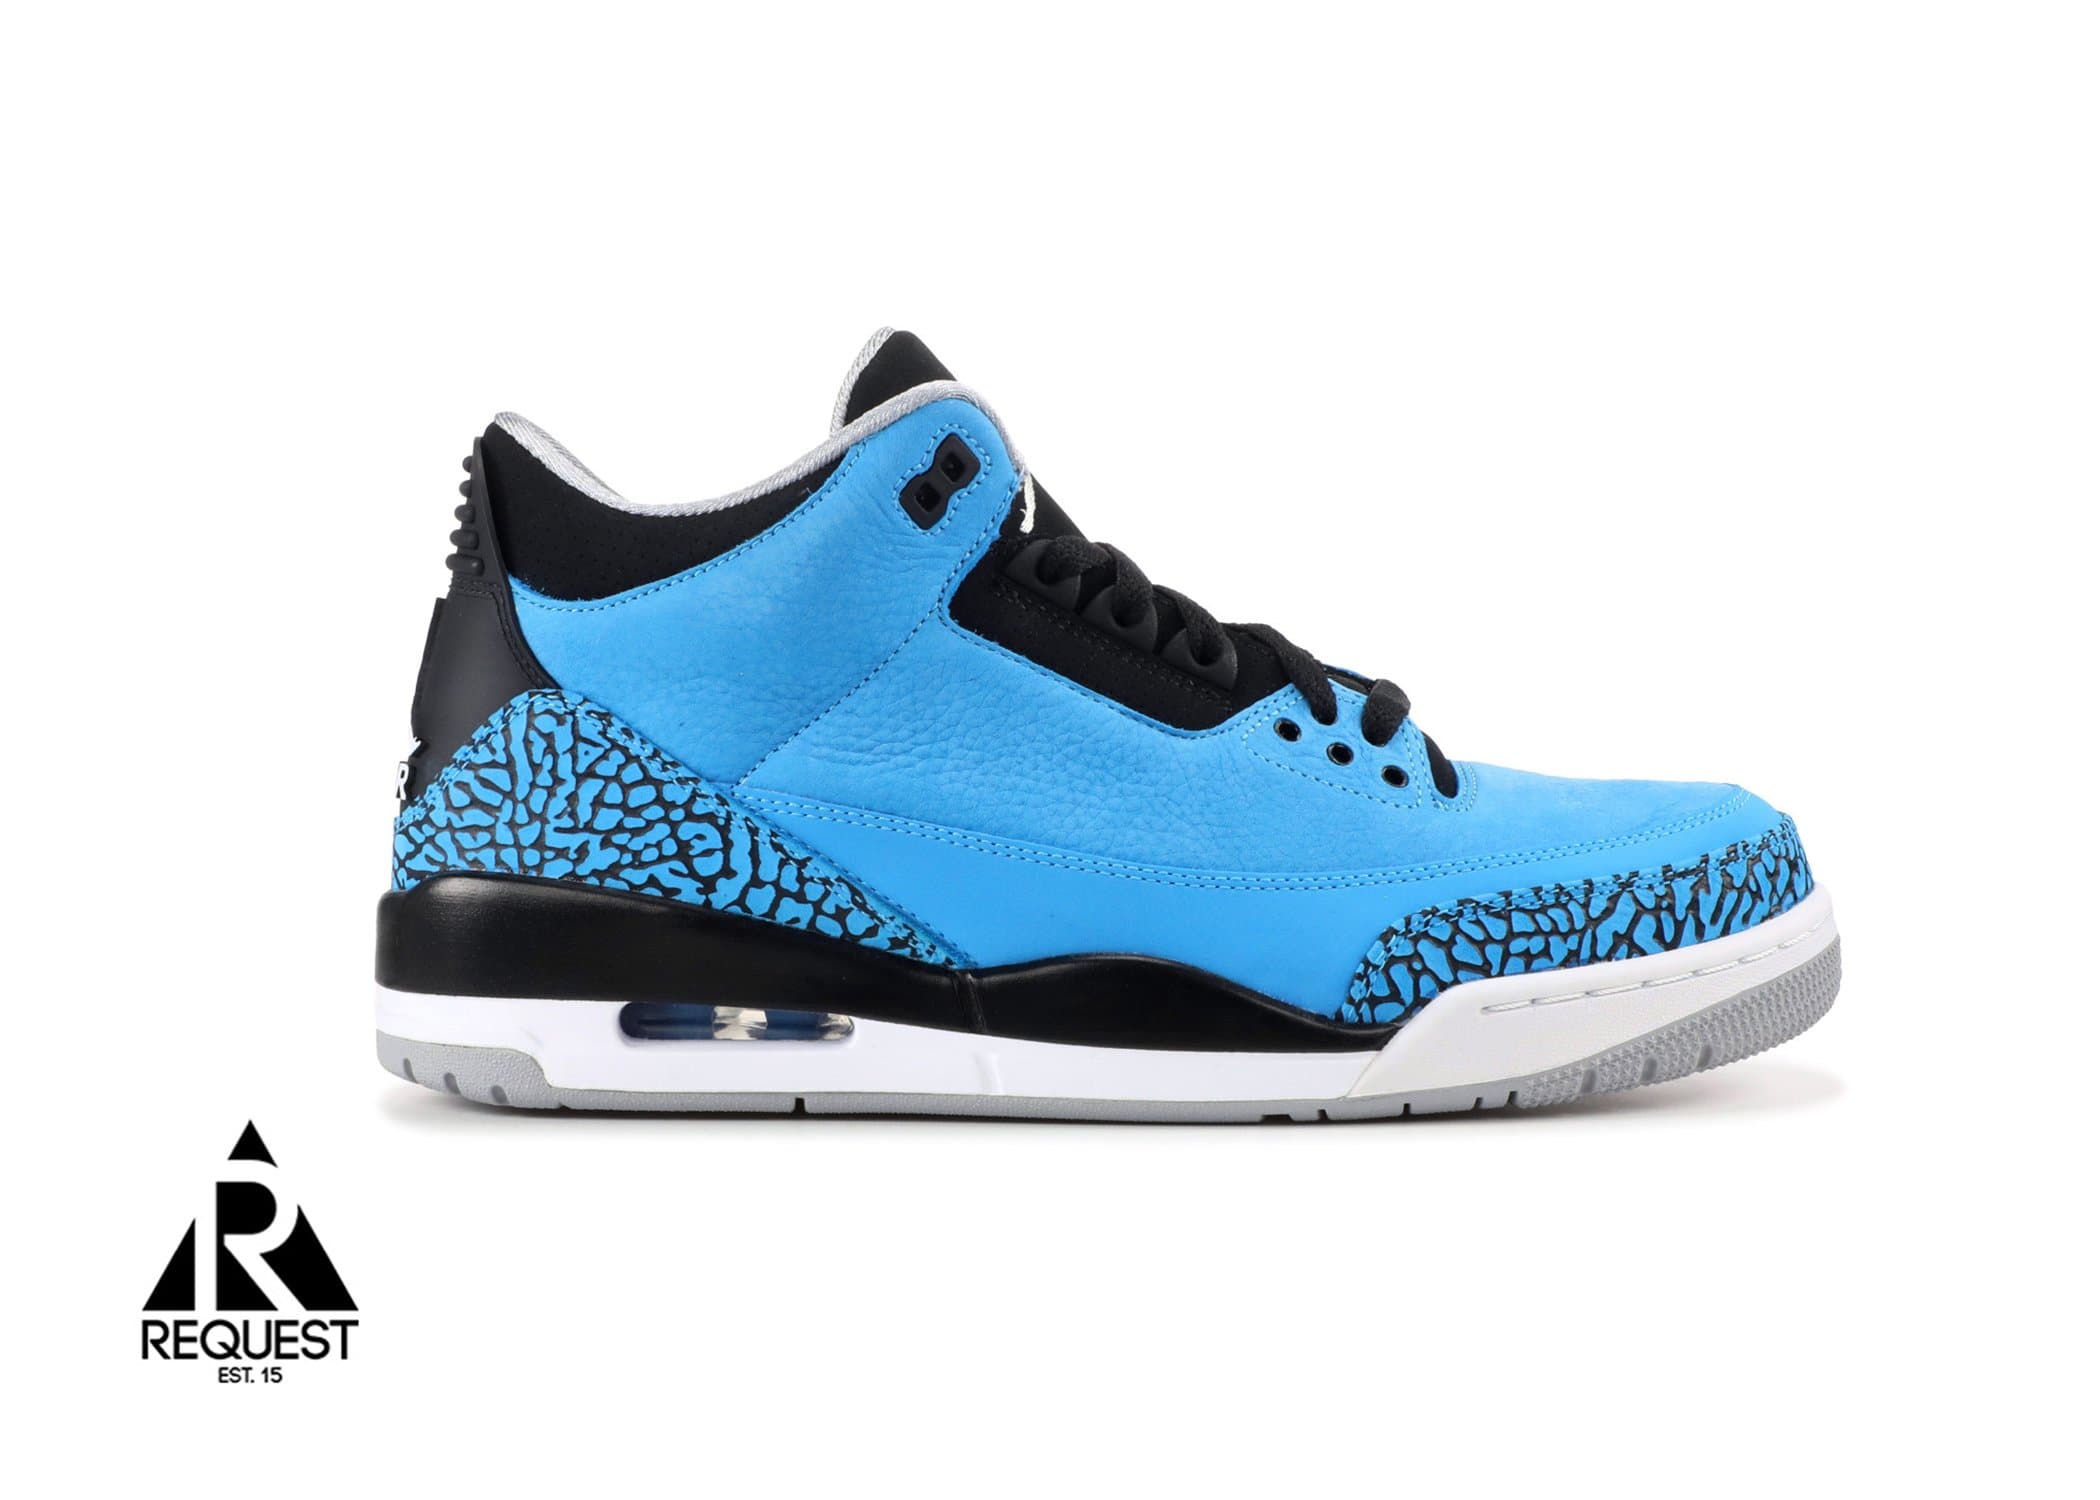 Air Jordan 3 Retro “Powder Blue”